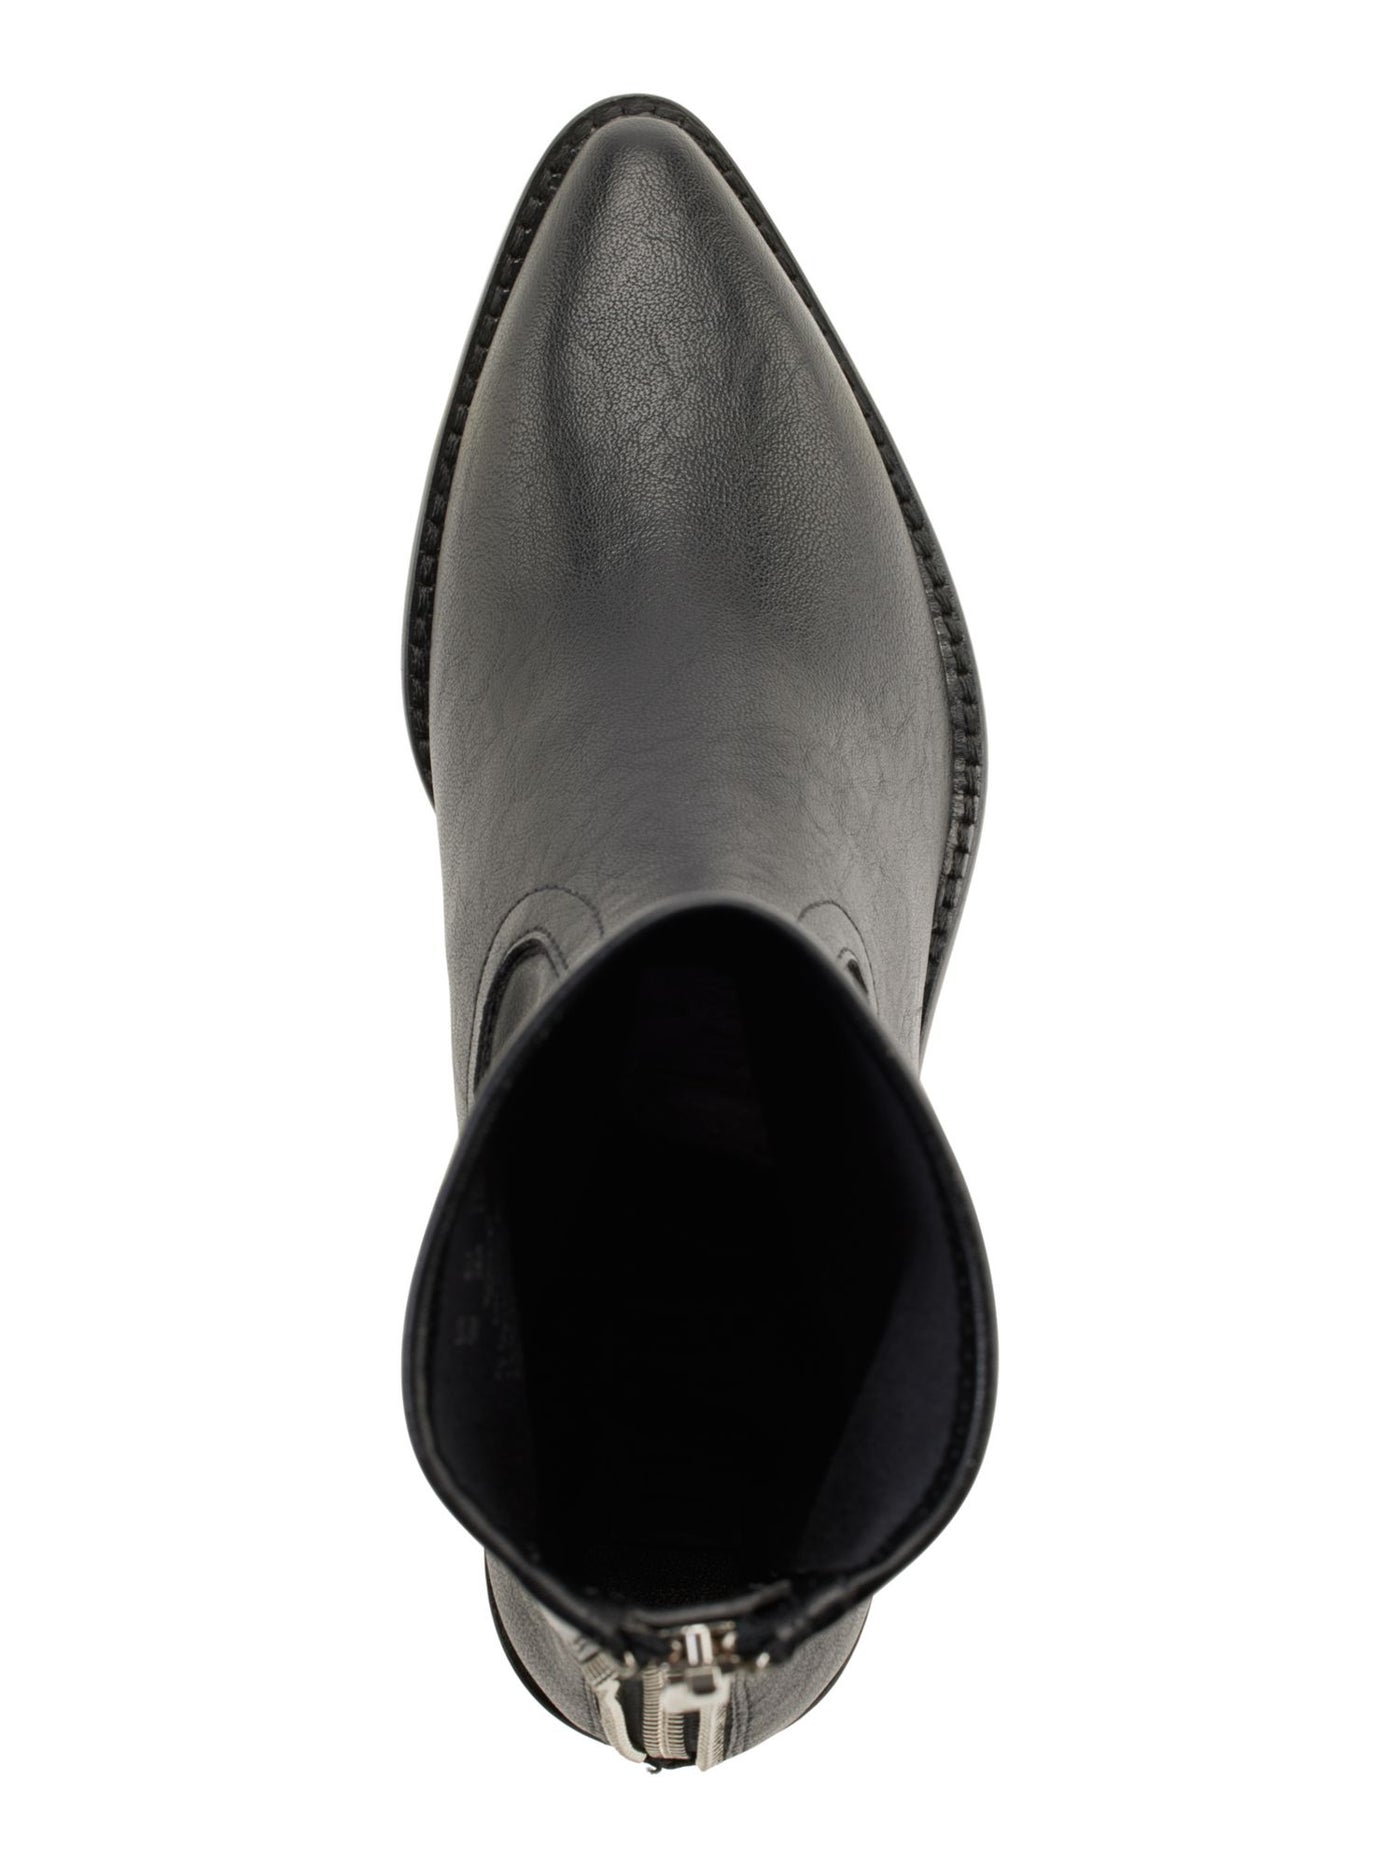 DKNY Womens Black Comfort Raelani Almond Toe Block Heel Zip-Up Leather Boots Shoes 6.5